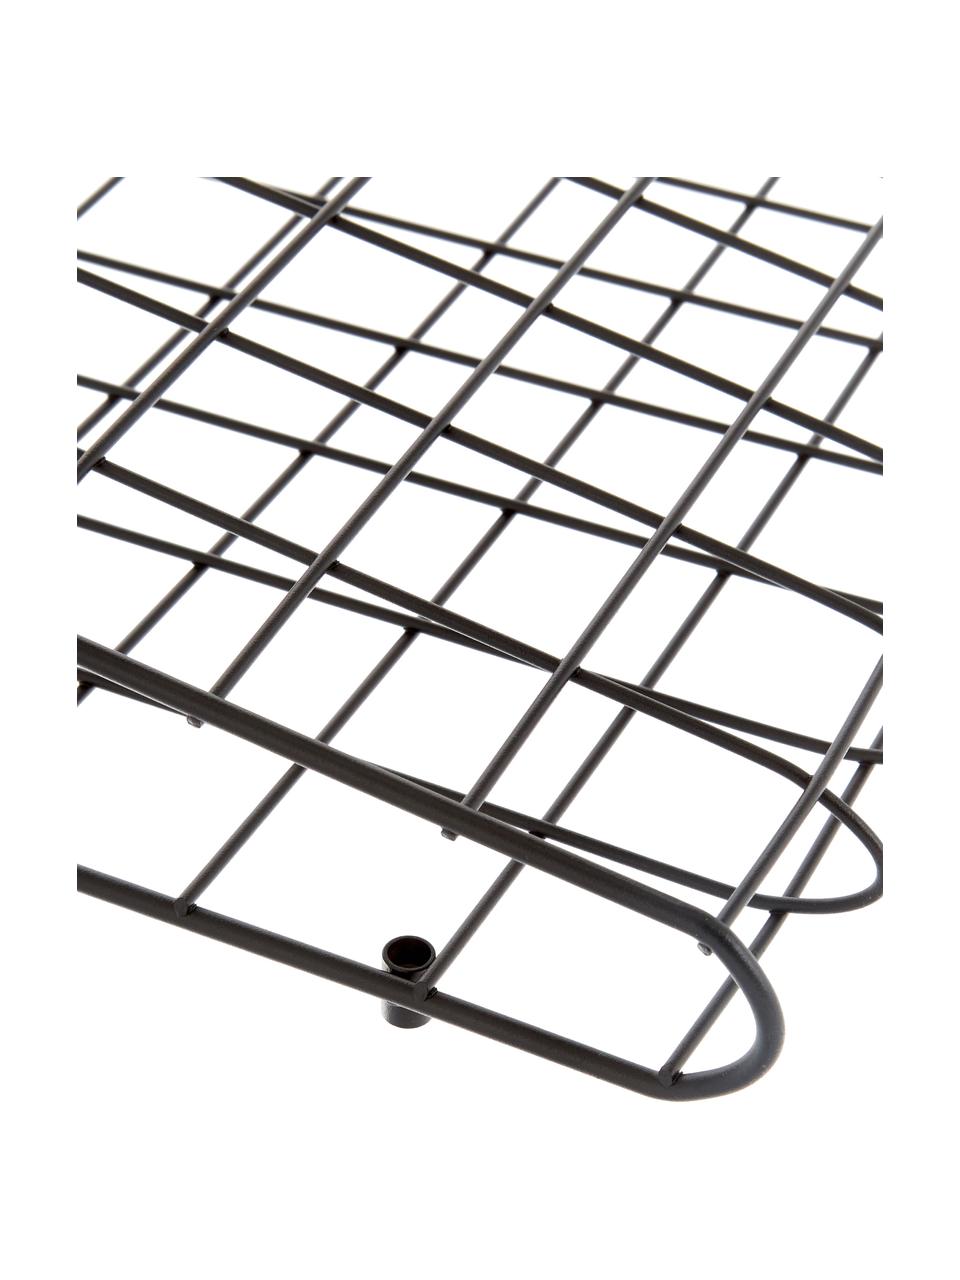 Grosse Gitter-Pinnwand Mesh in Schwarz, Stahl, lackiert, Schwarz, B 51 x H 72 cm